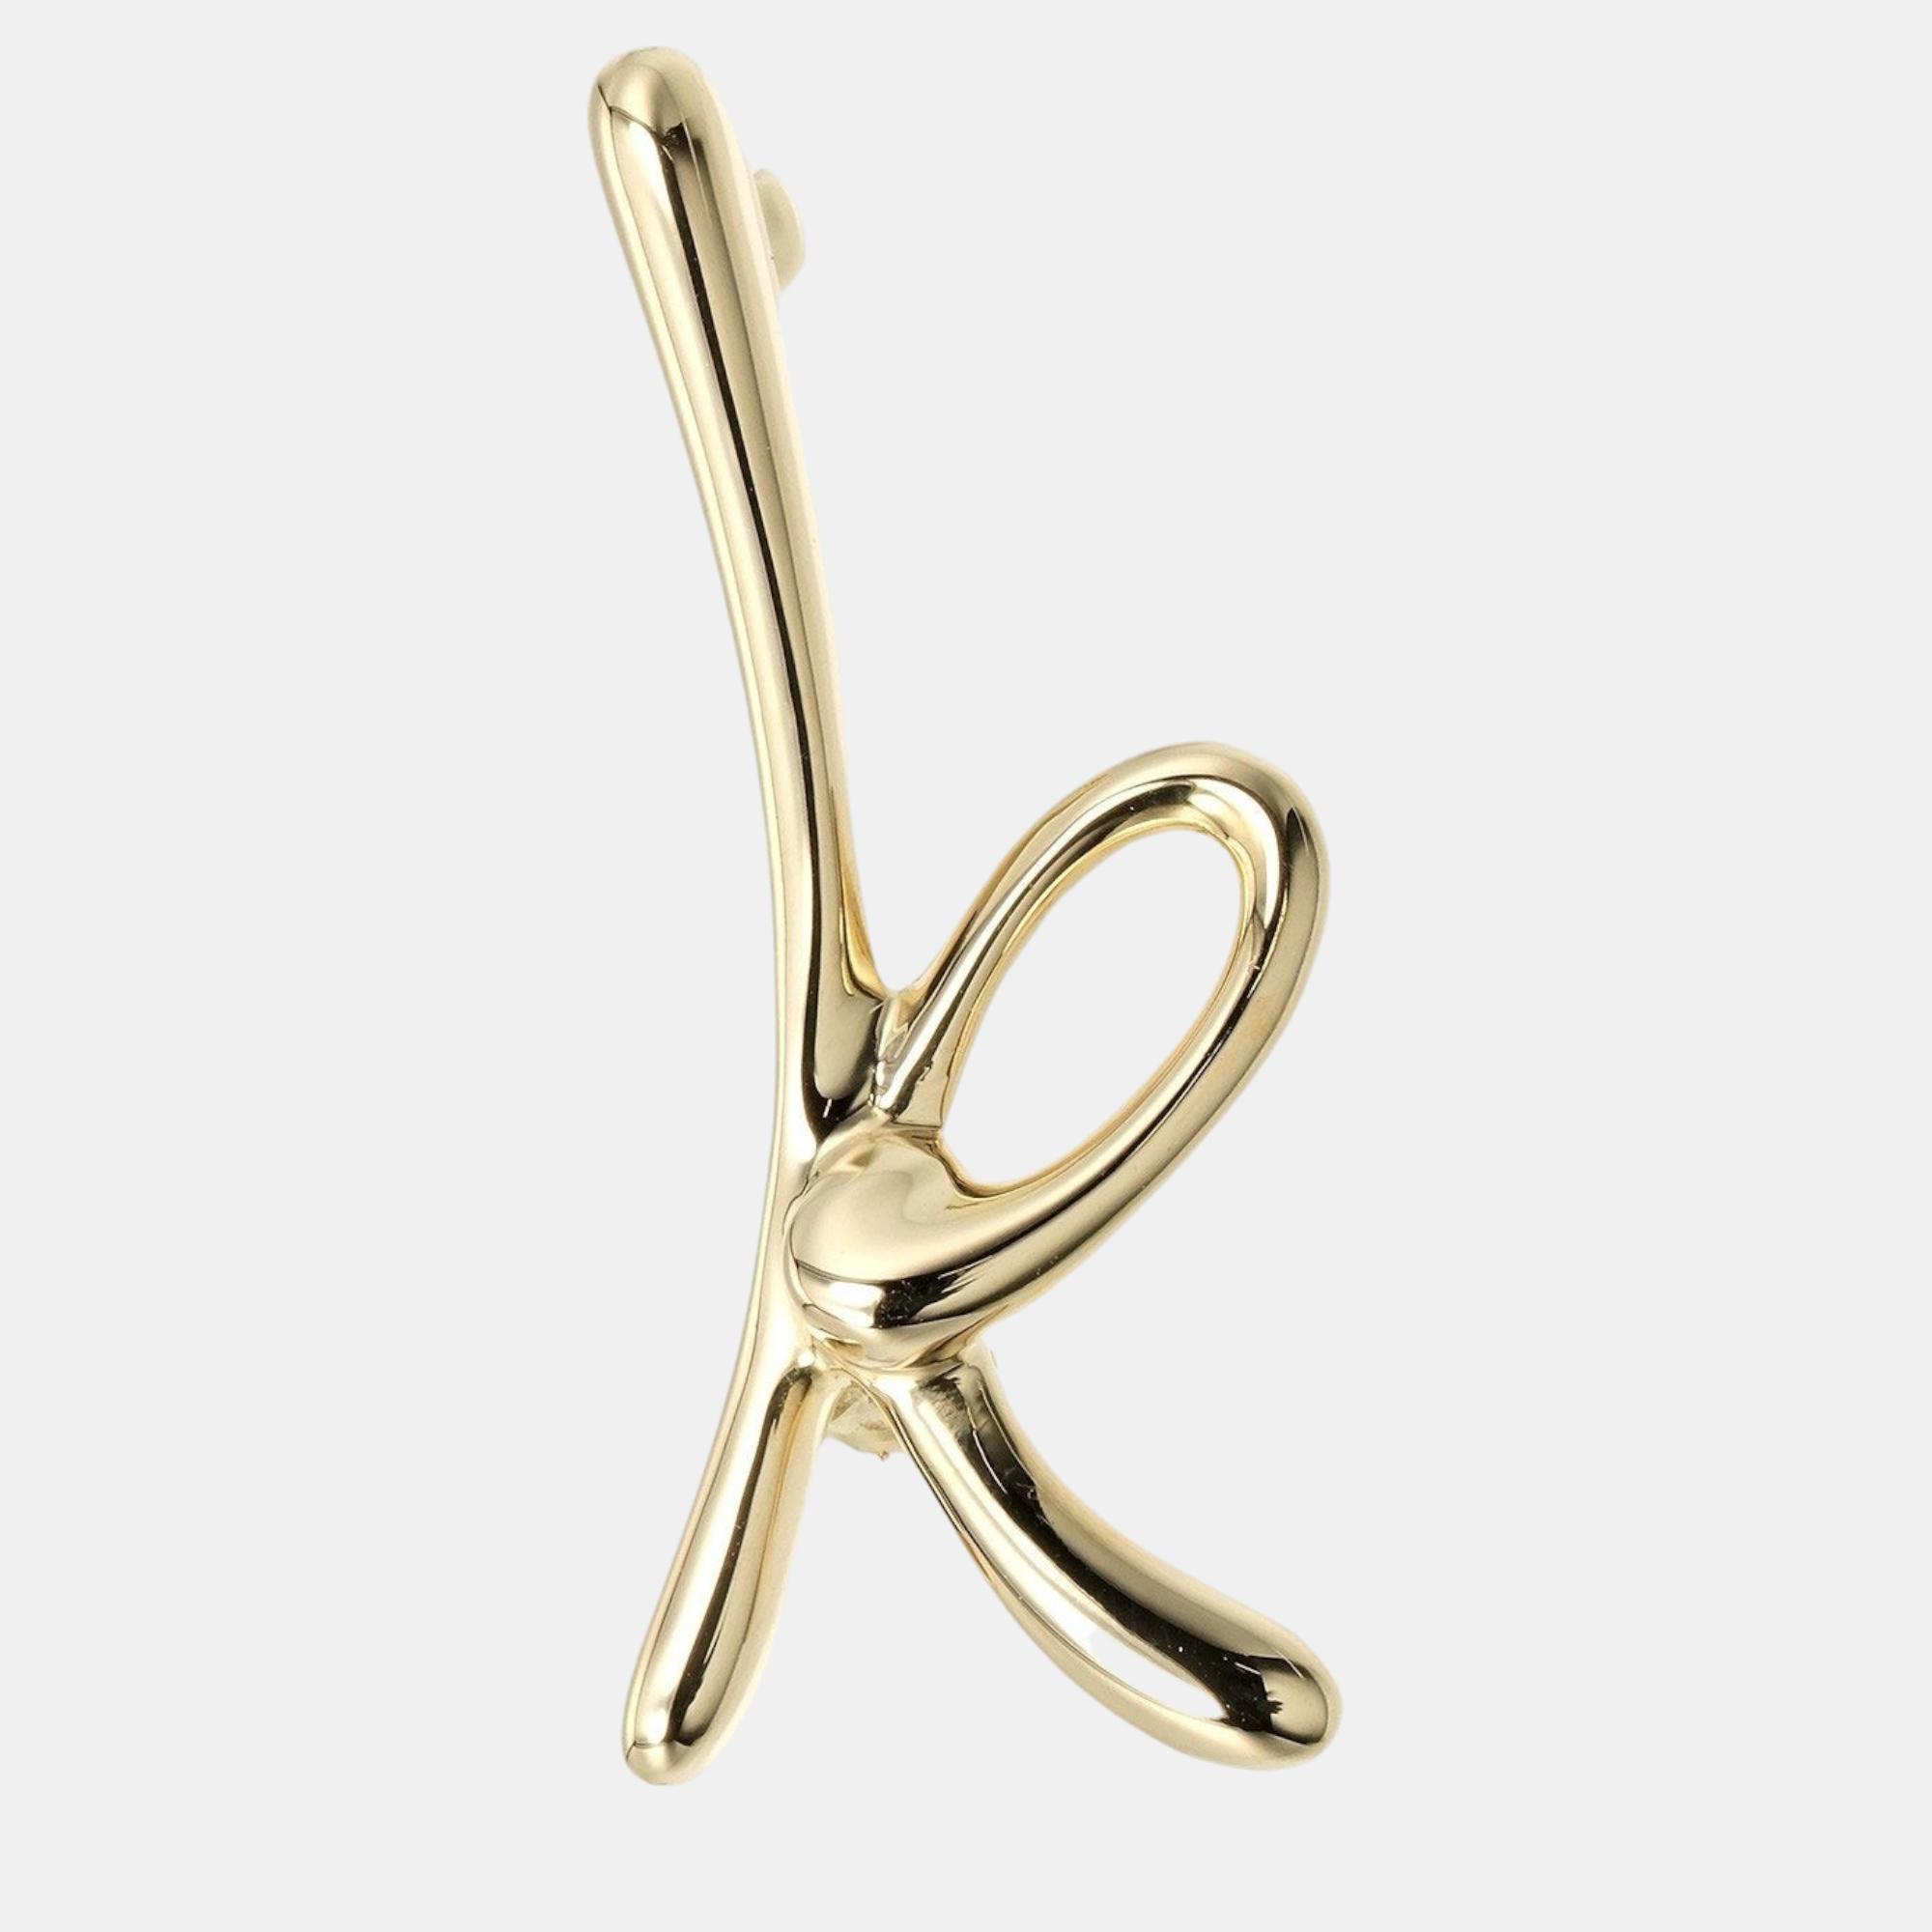 Tiffany & co. 18k yellow gold elsa peretti large alphabet letter 'k' brooch